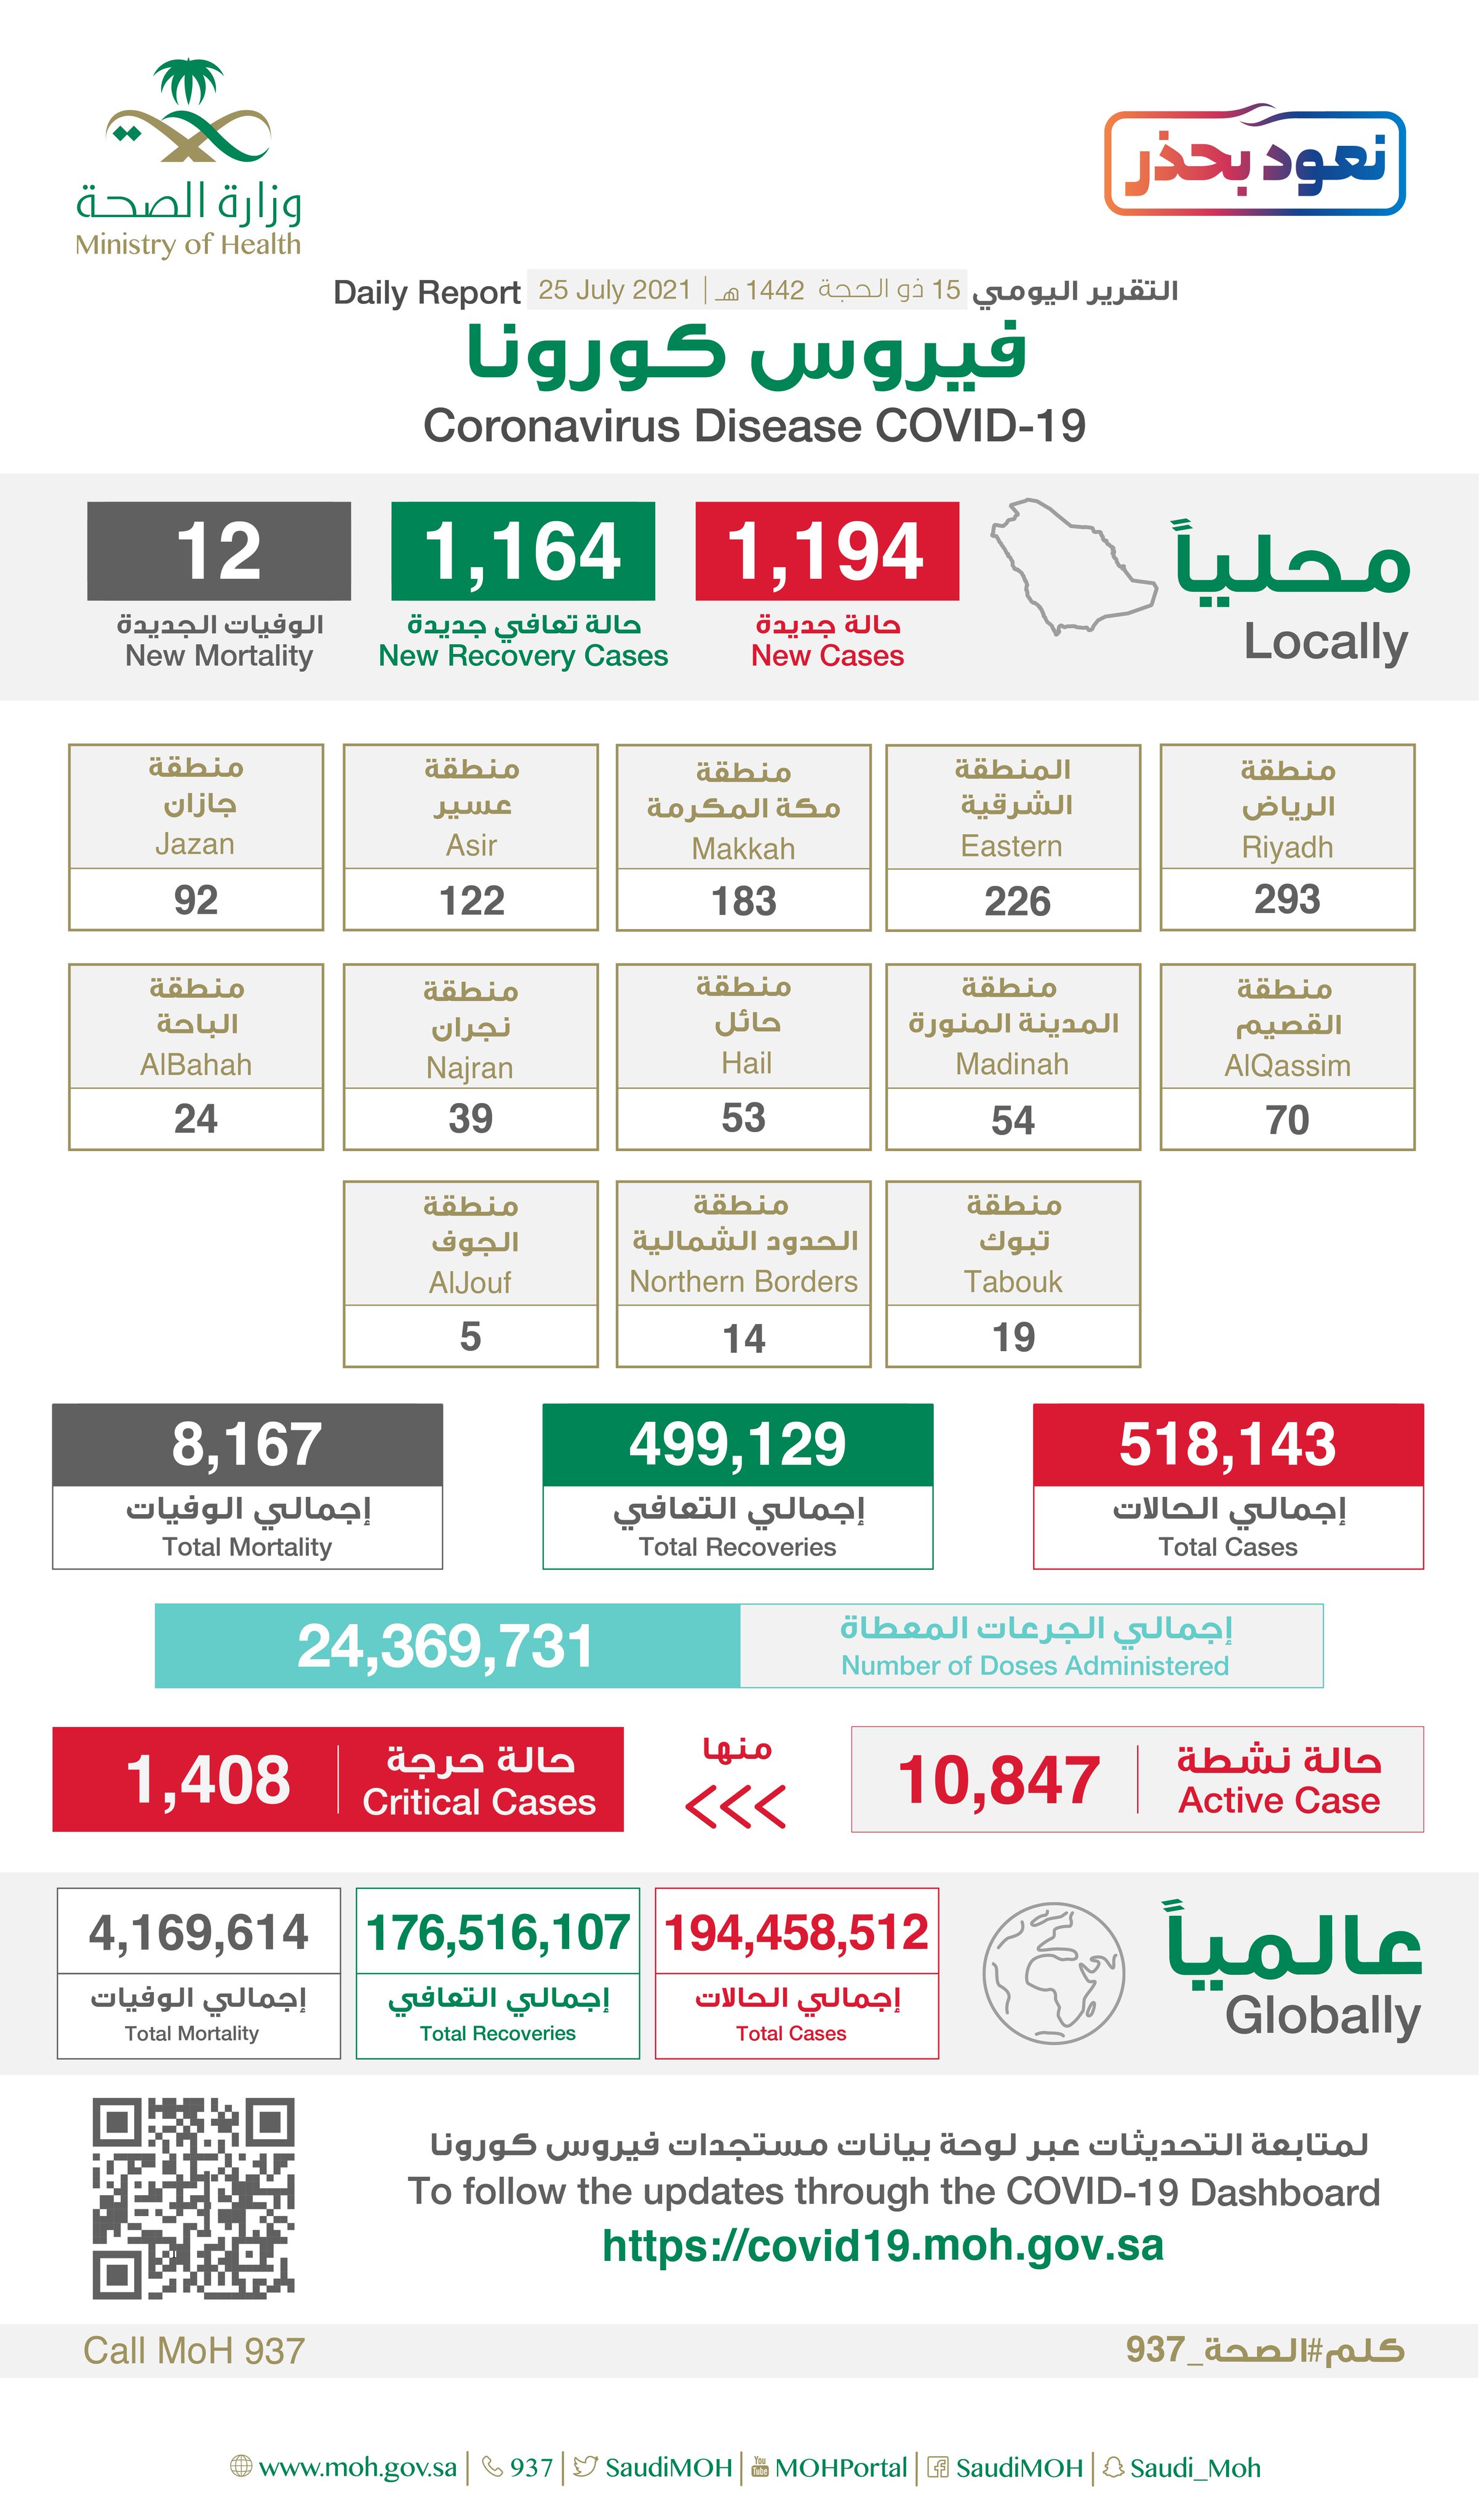 Saudi Arabia Coronavirus : Total Cases : 518,143 , New Cases :1,194, Cured : 499,129 , Deaths: 8,167 , Active Cases : 10,847